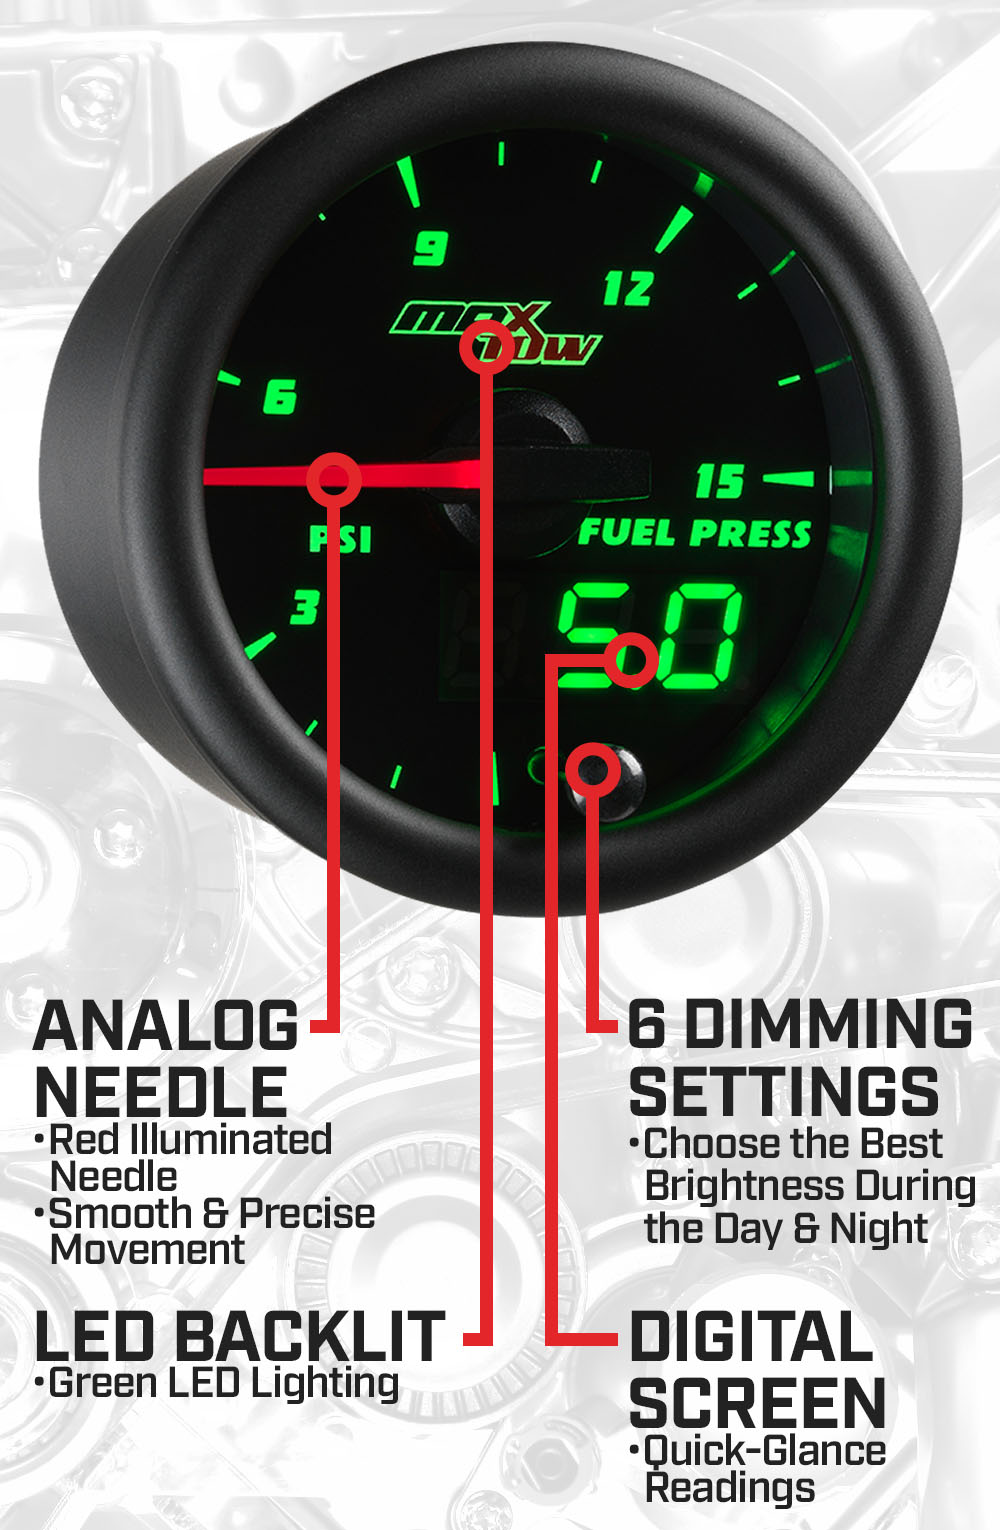 Black & Green Double Vision 15 PSI Fuel Pressure Gauge Features